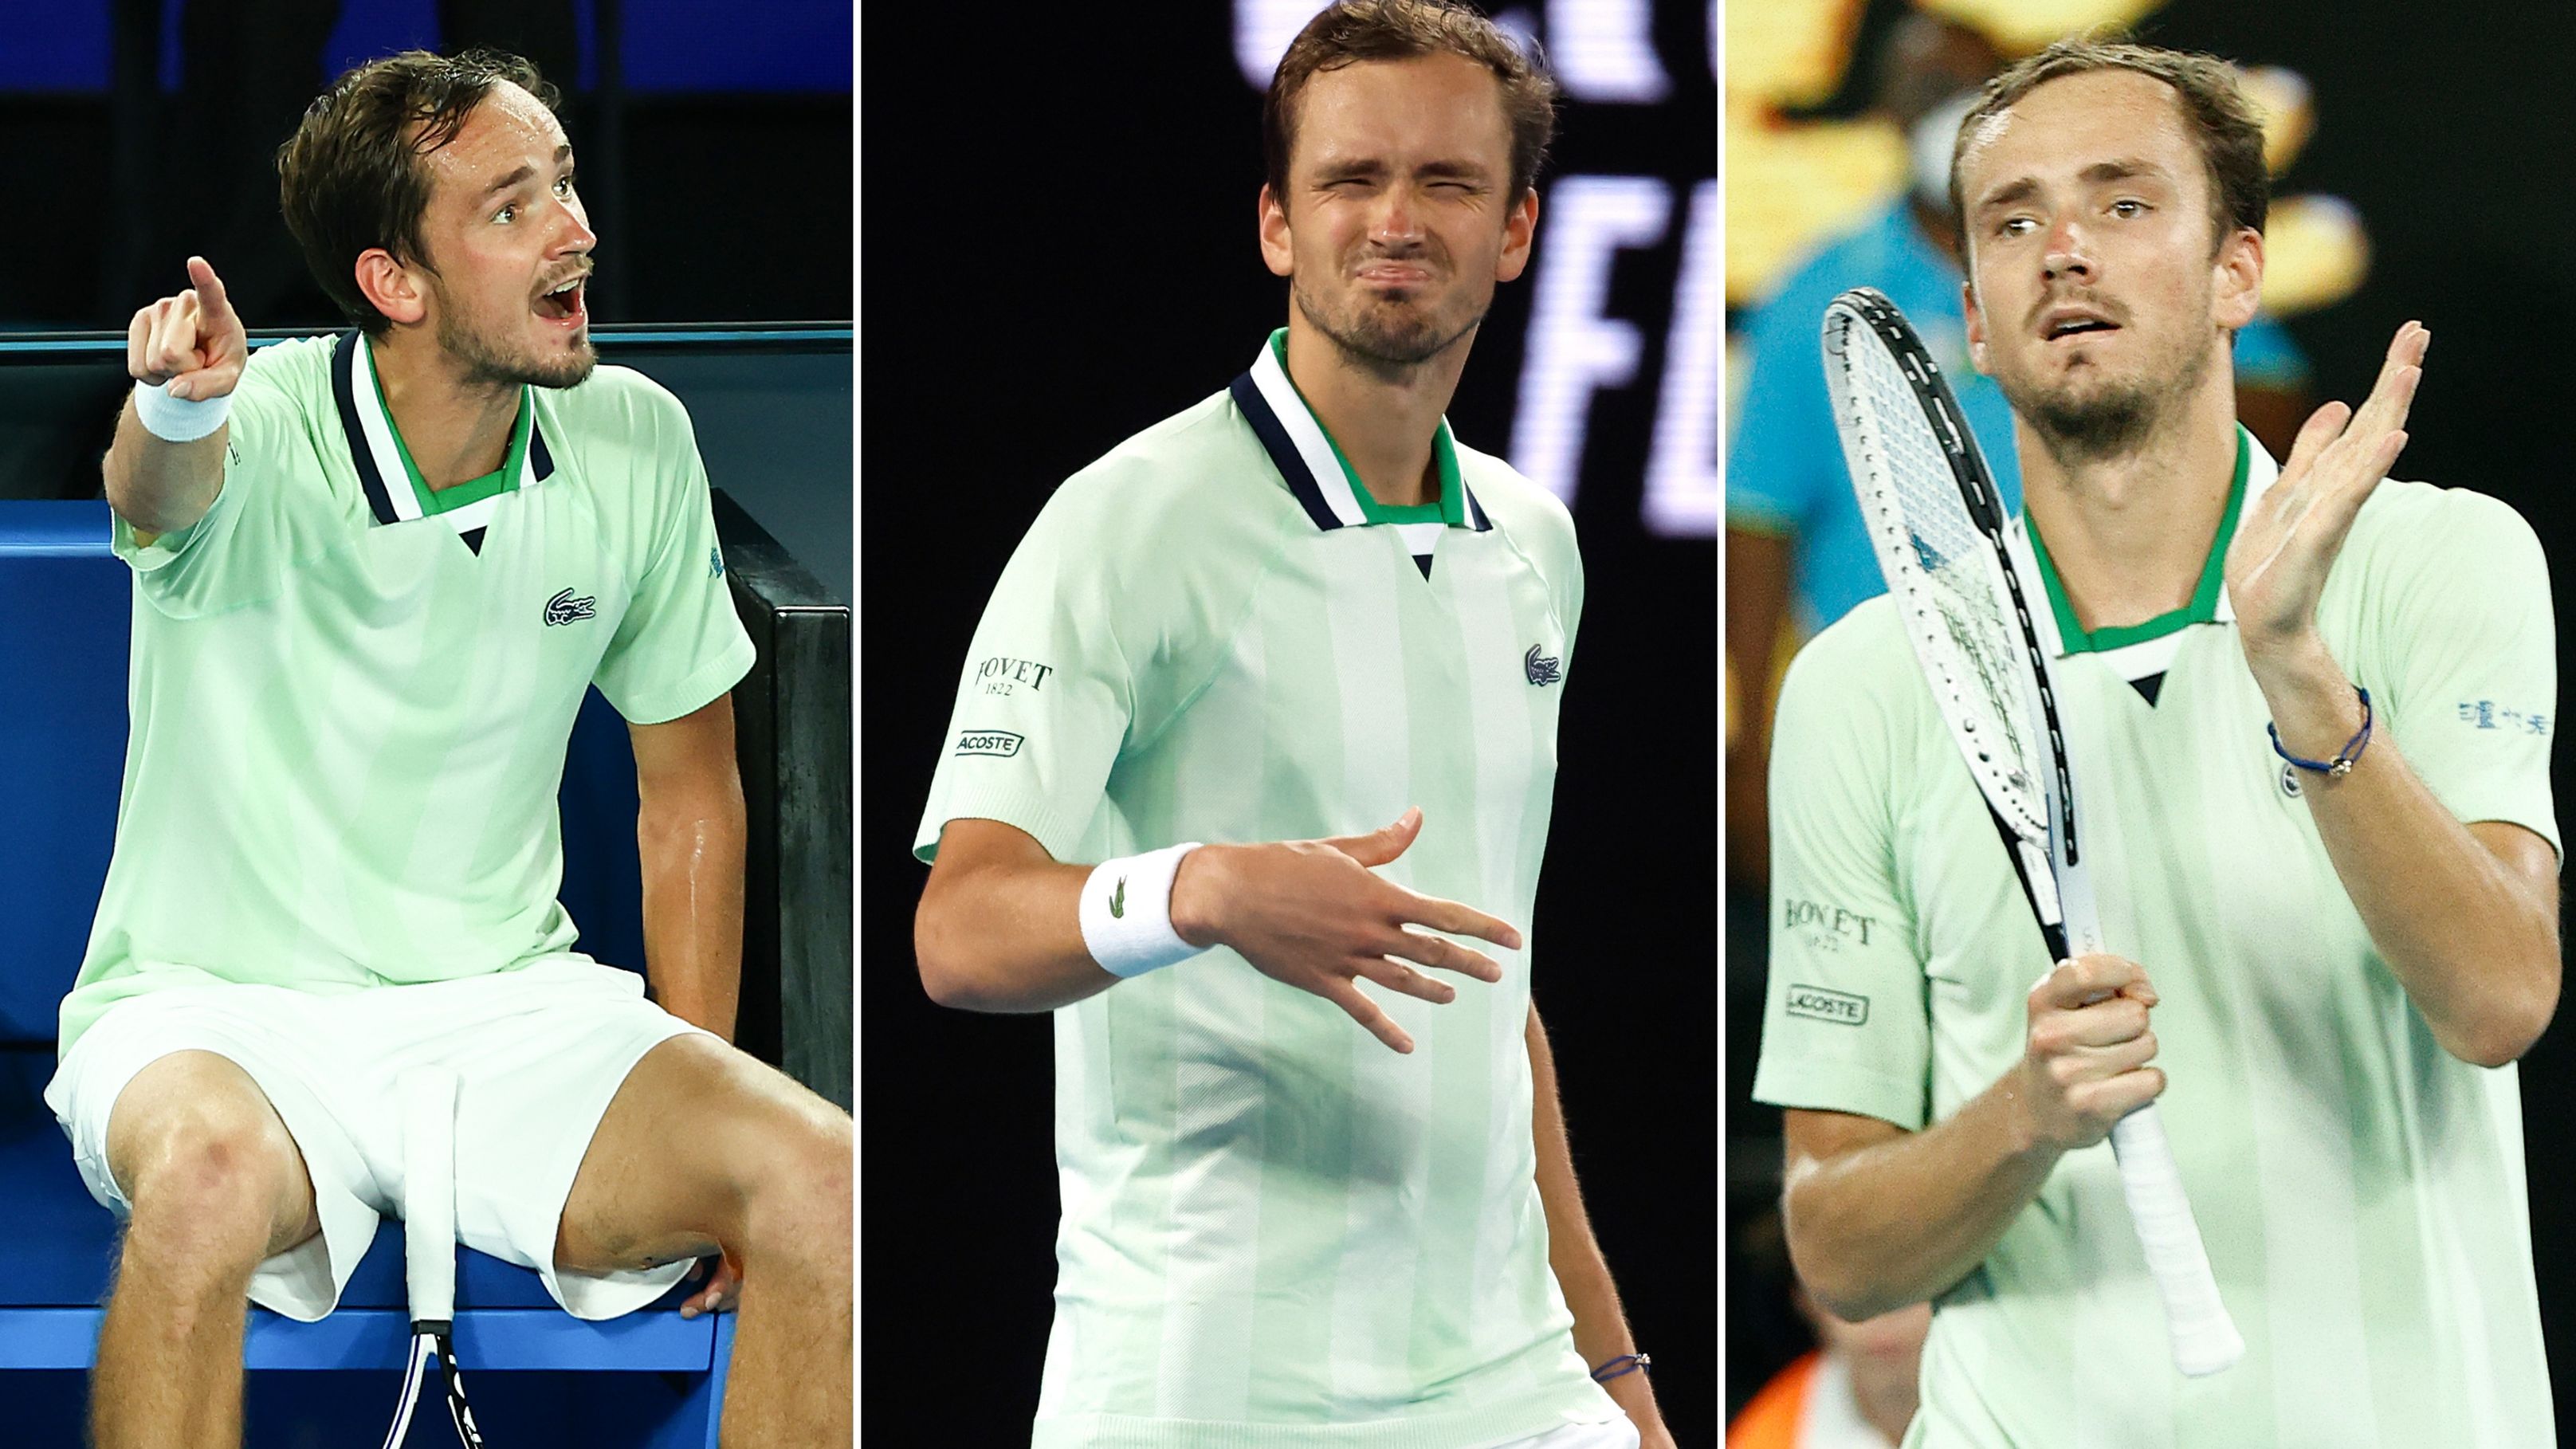 The moments that made Daniil Medvedev the perfect Australian Open villain